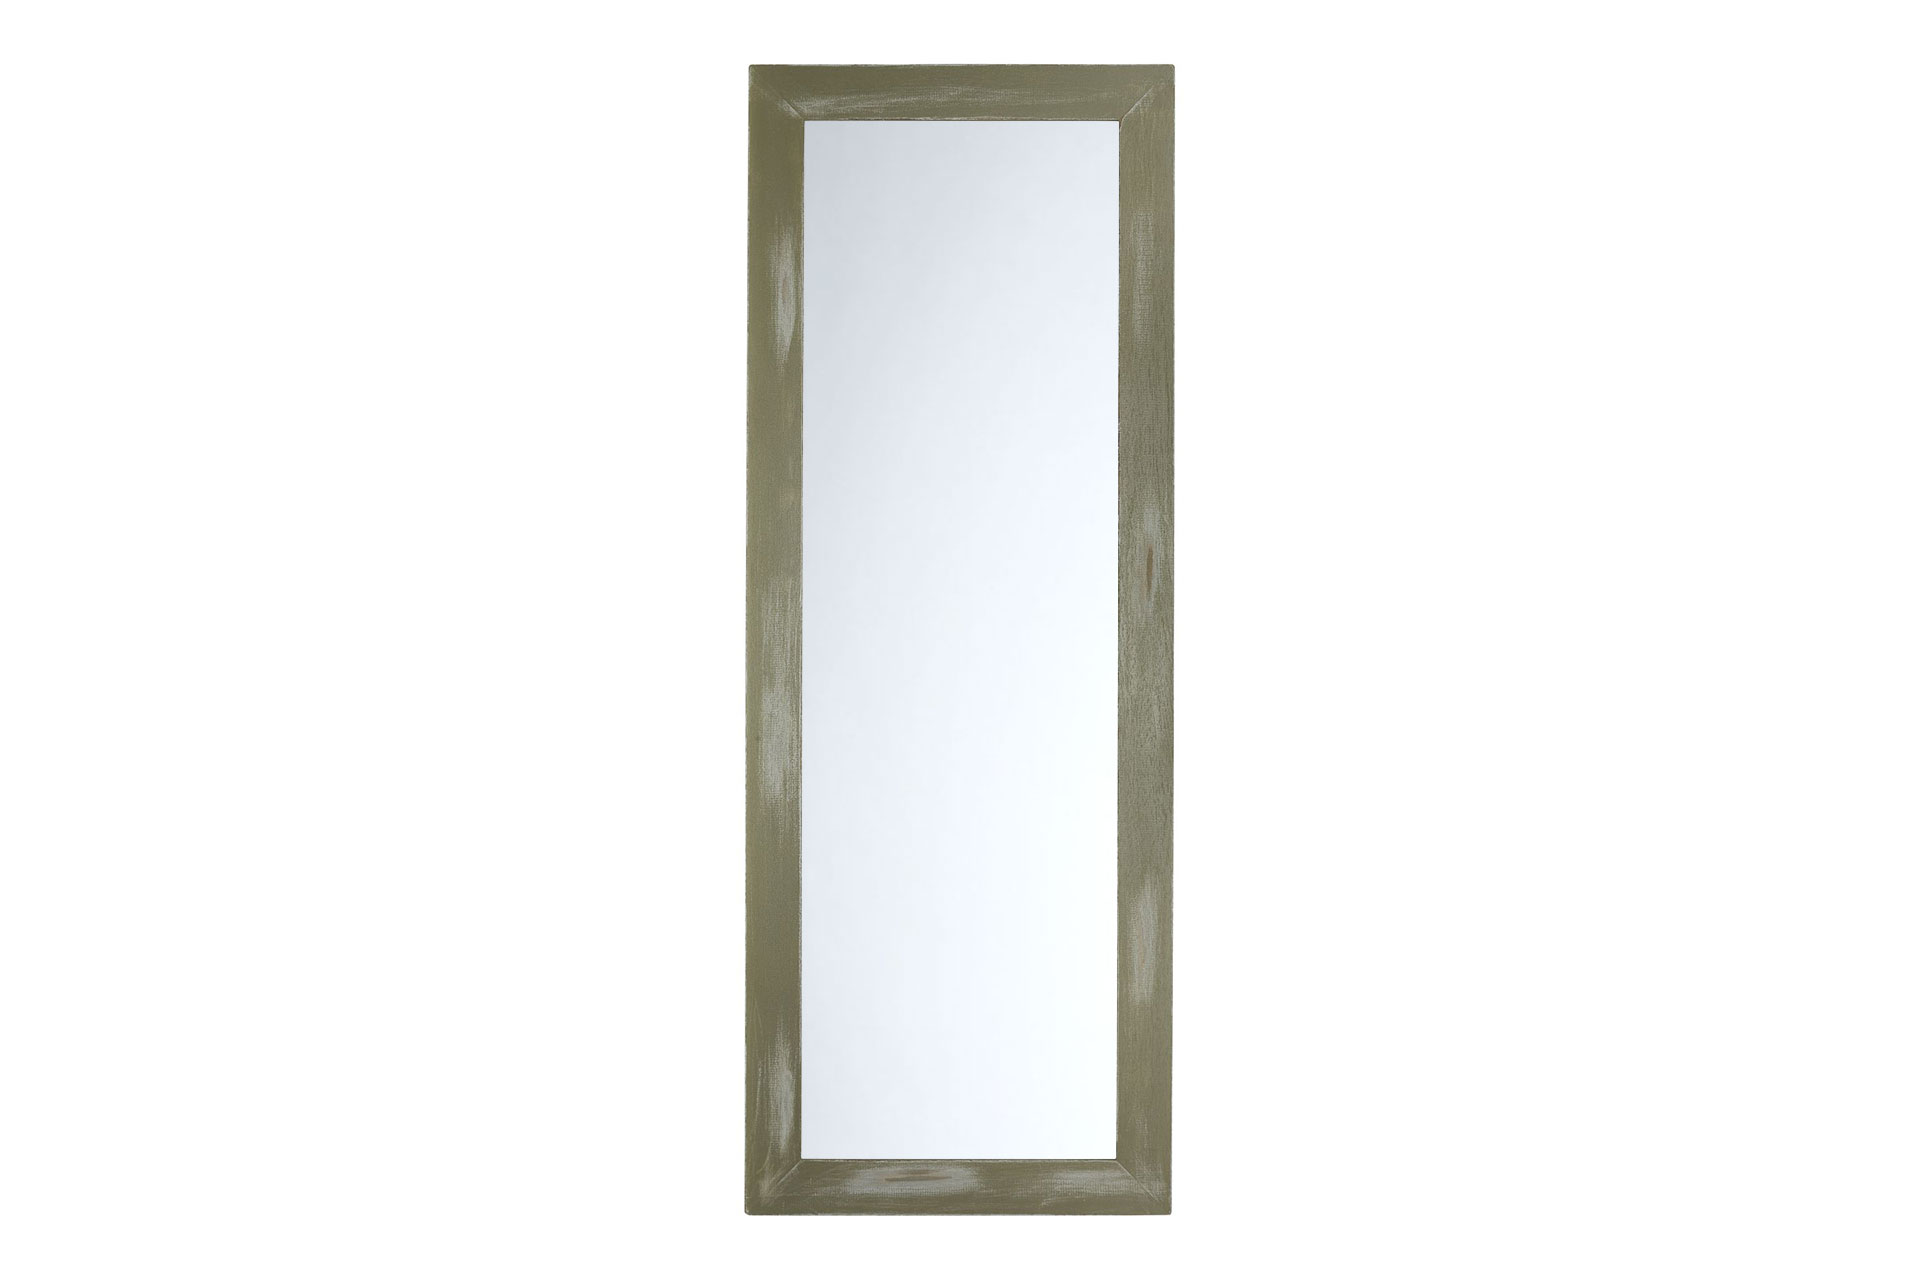 Wandspiegel Modell Olive, Shabby-Chic, olivgrün, Facettenspiegel, rechteckig, Holz, Innenbereich, modern, ASR-Rahmendesign